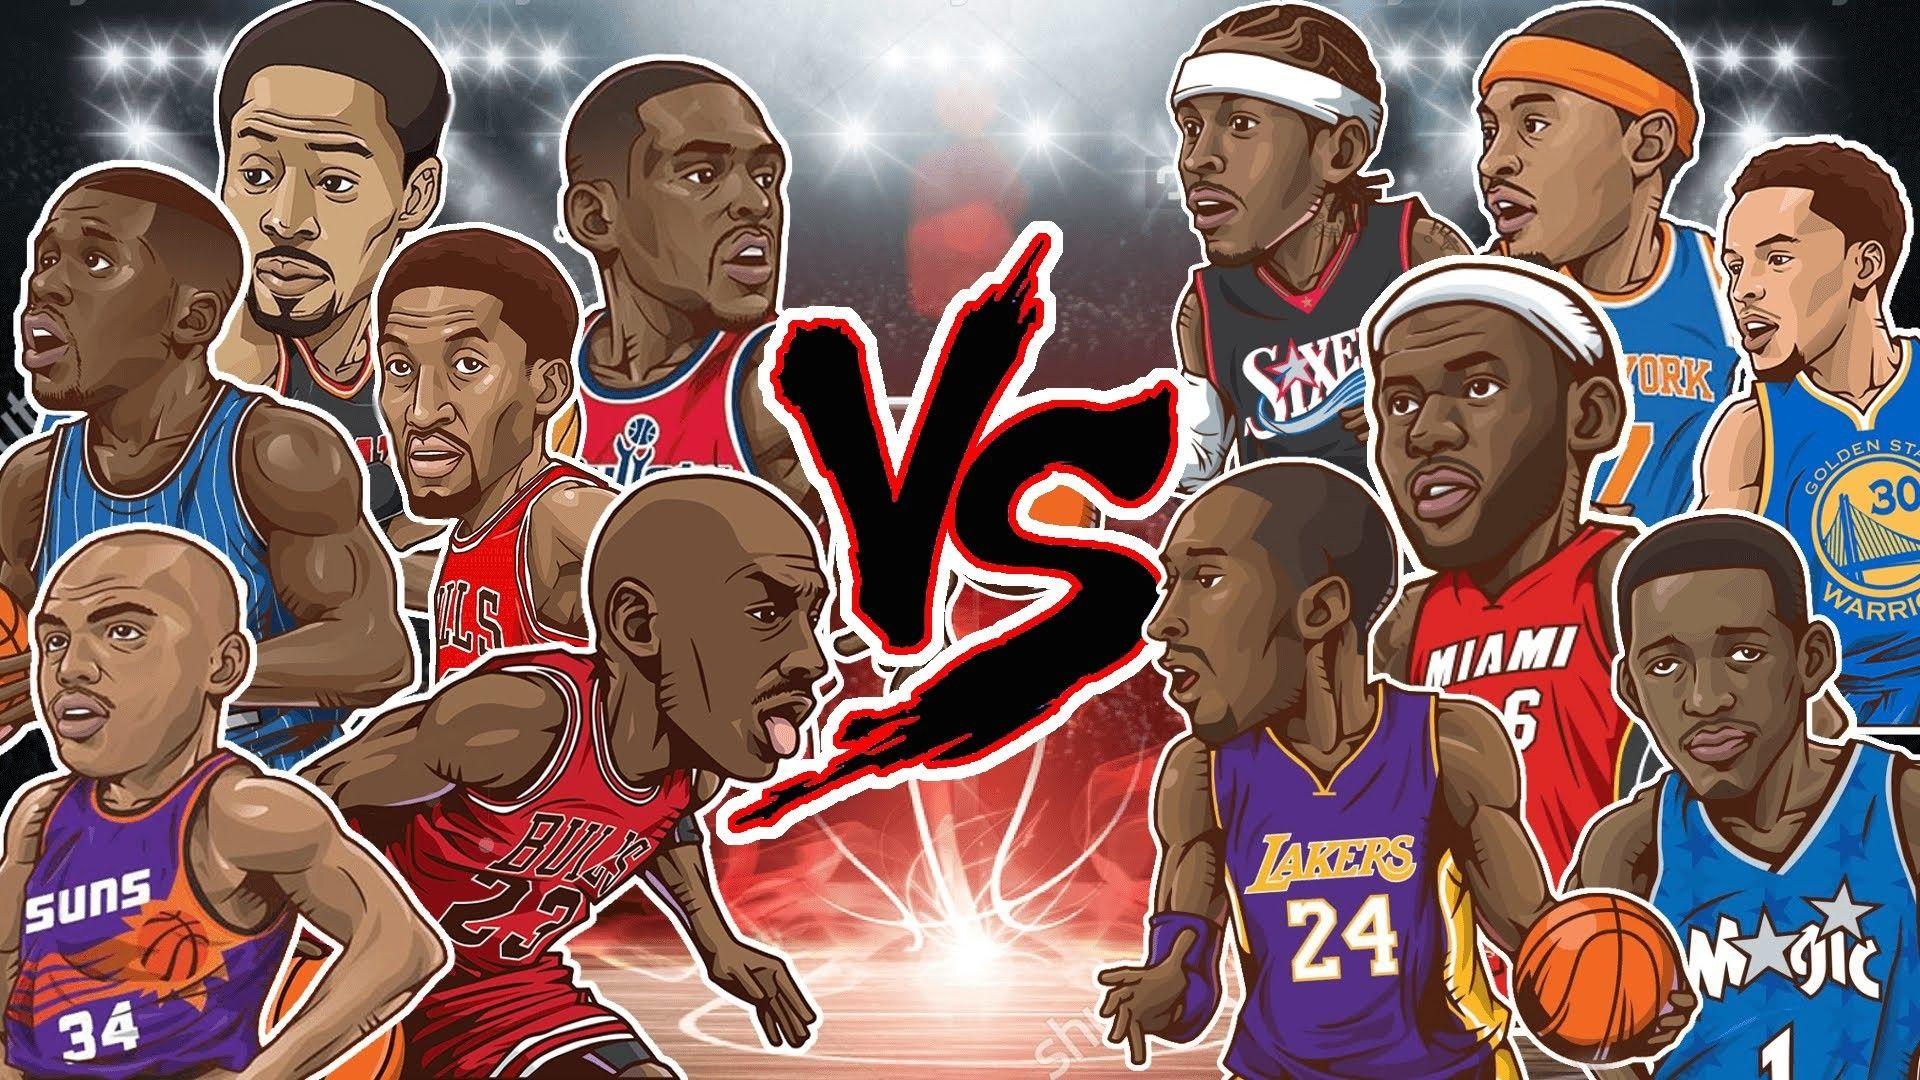 Basketball Cartoon Wallpapers - Top Free Basketball Cartoon Backgrounds